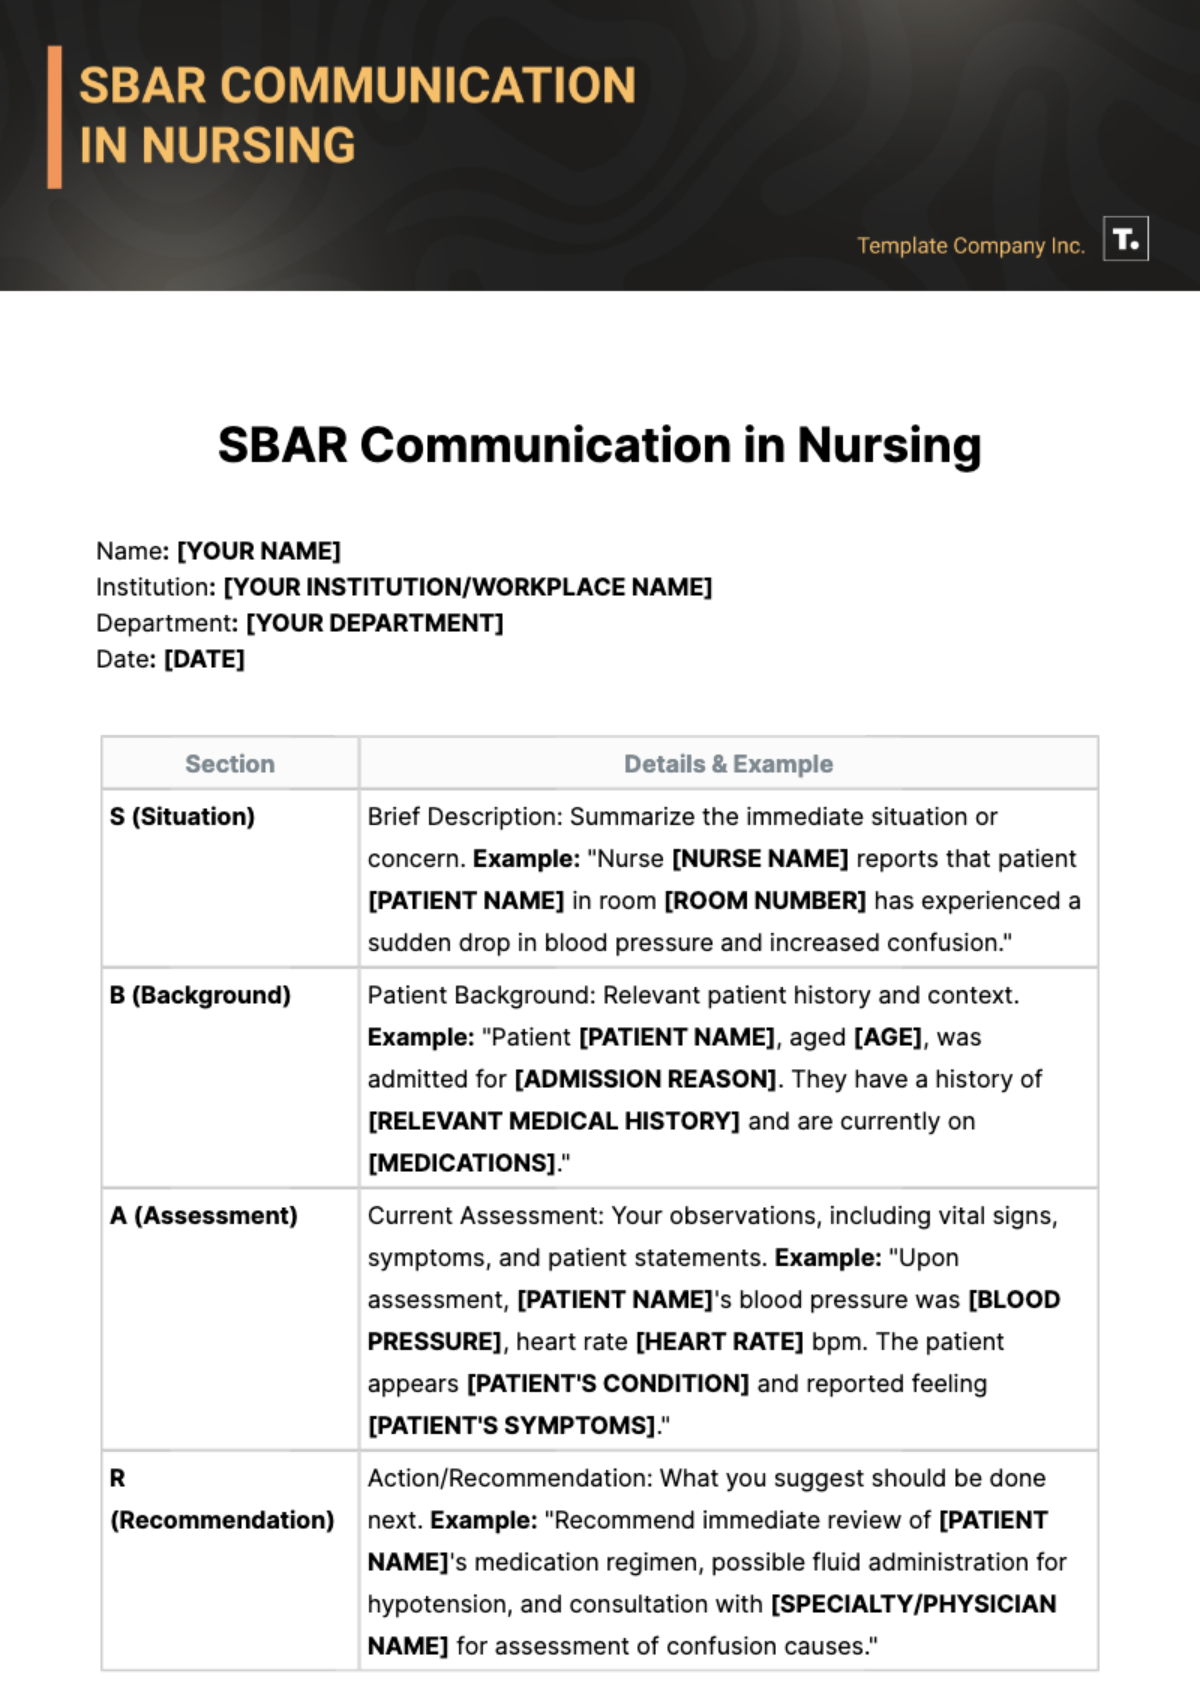 SBAR Communication Nursing Template